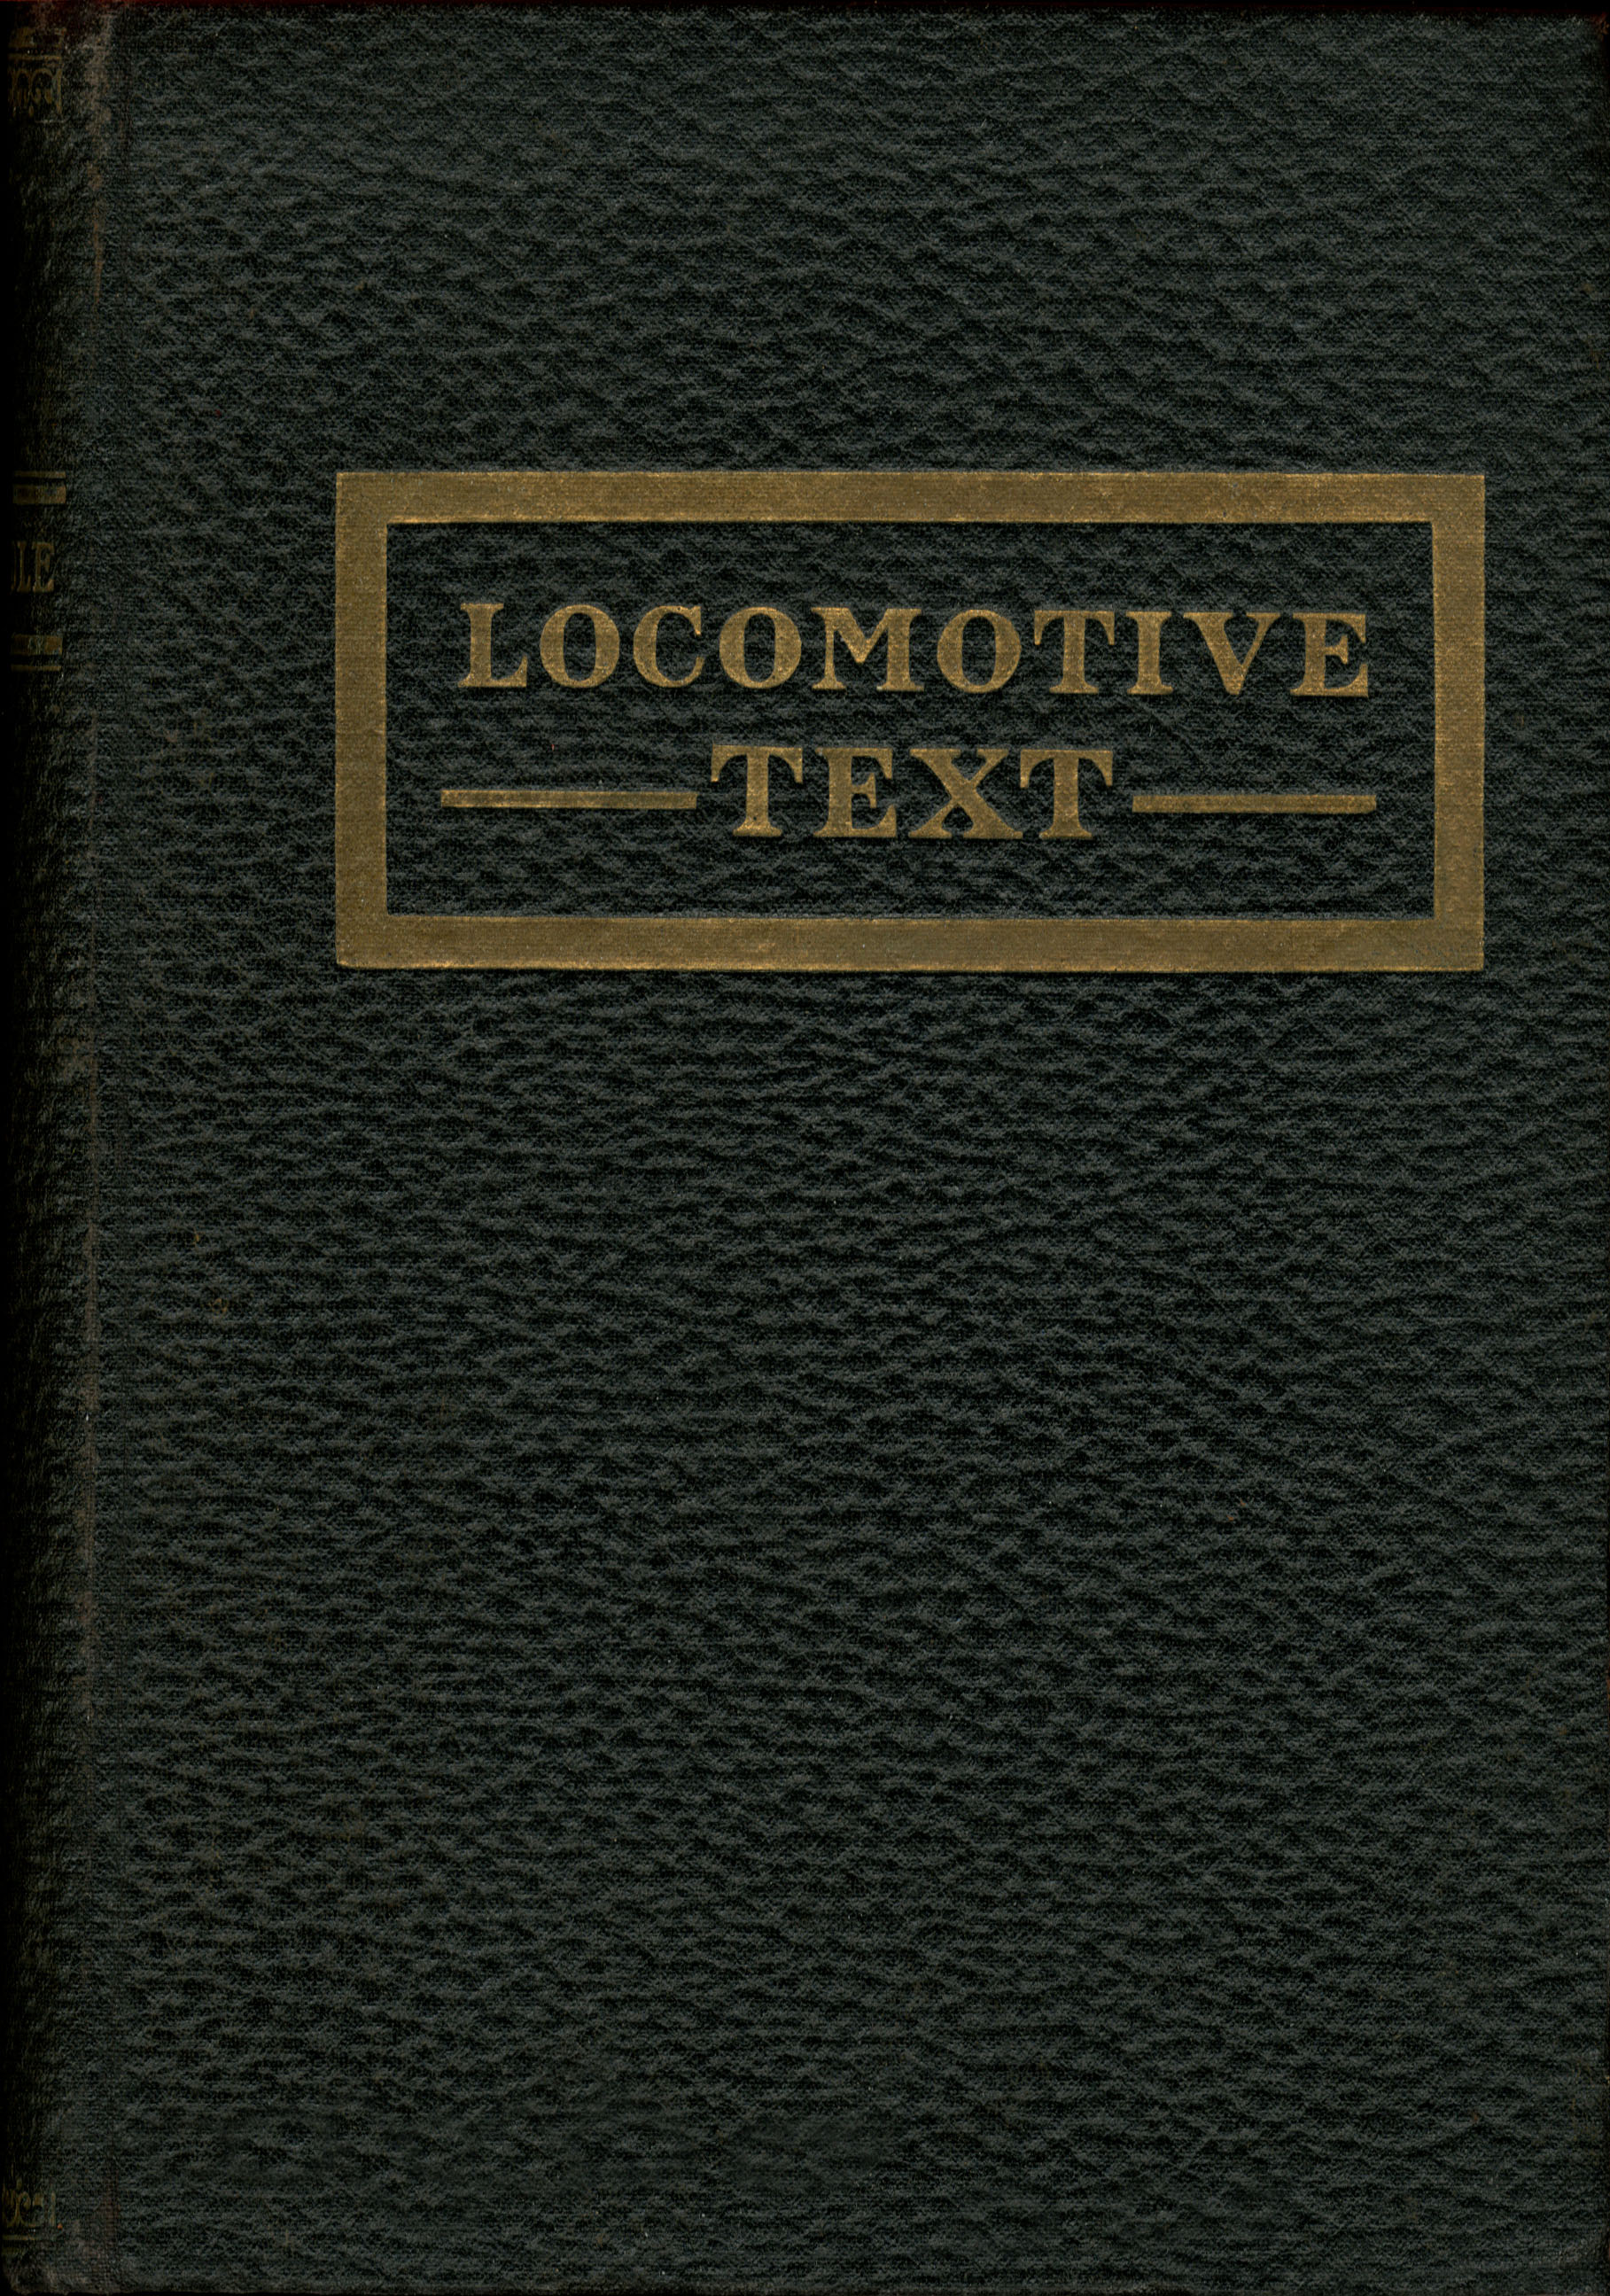 Locomotive Text